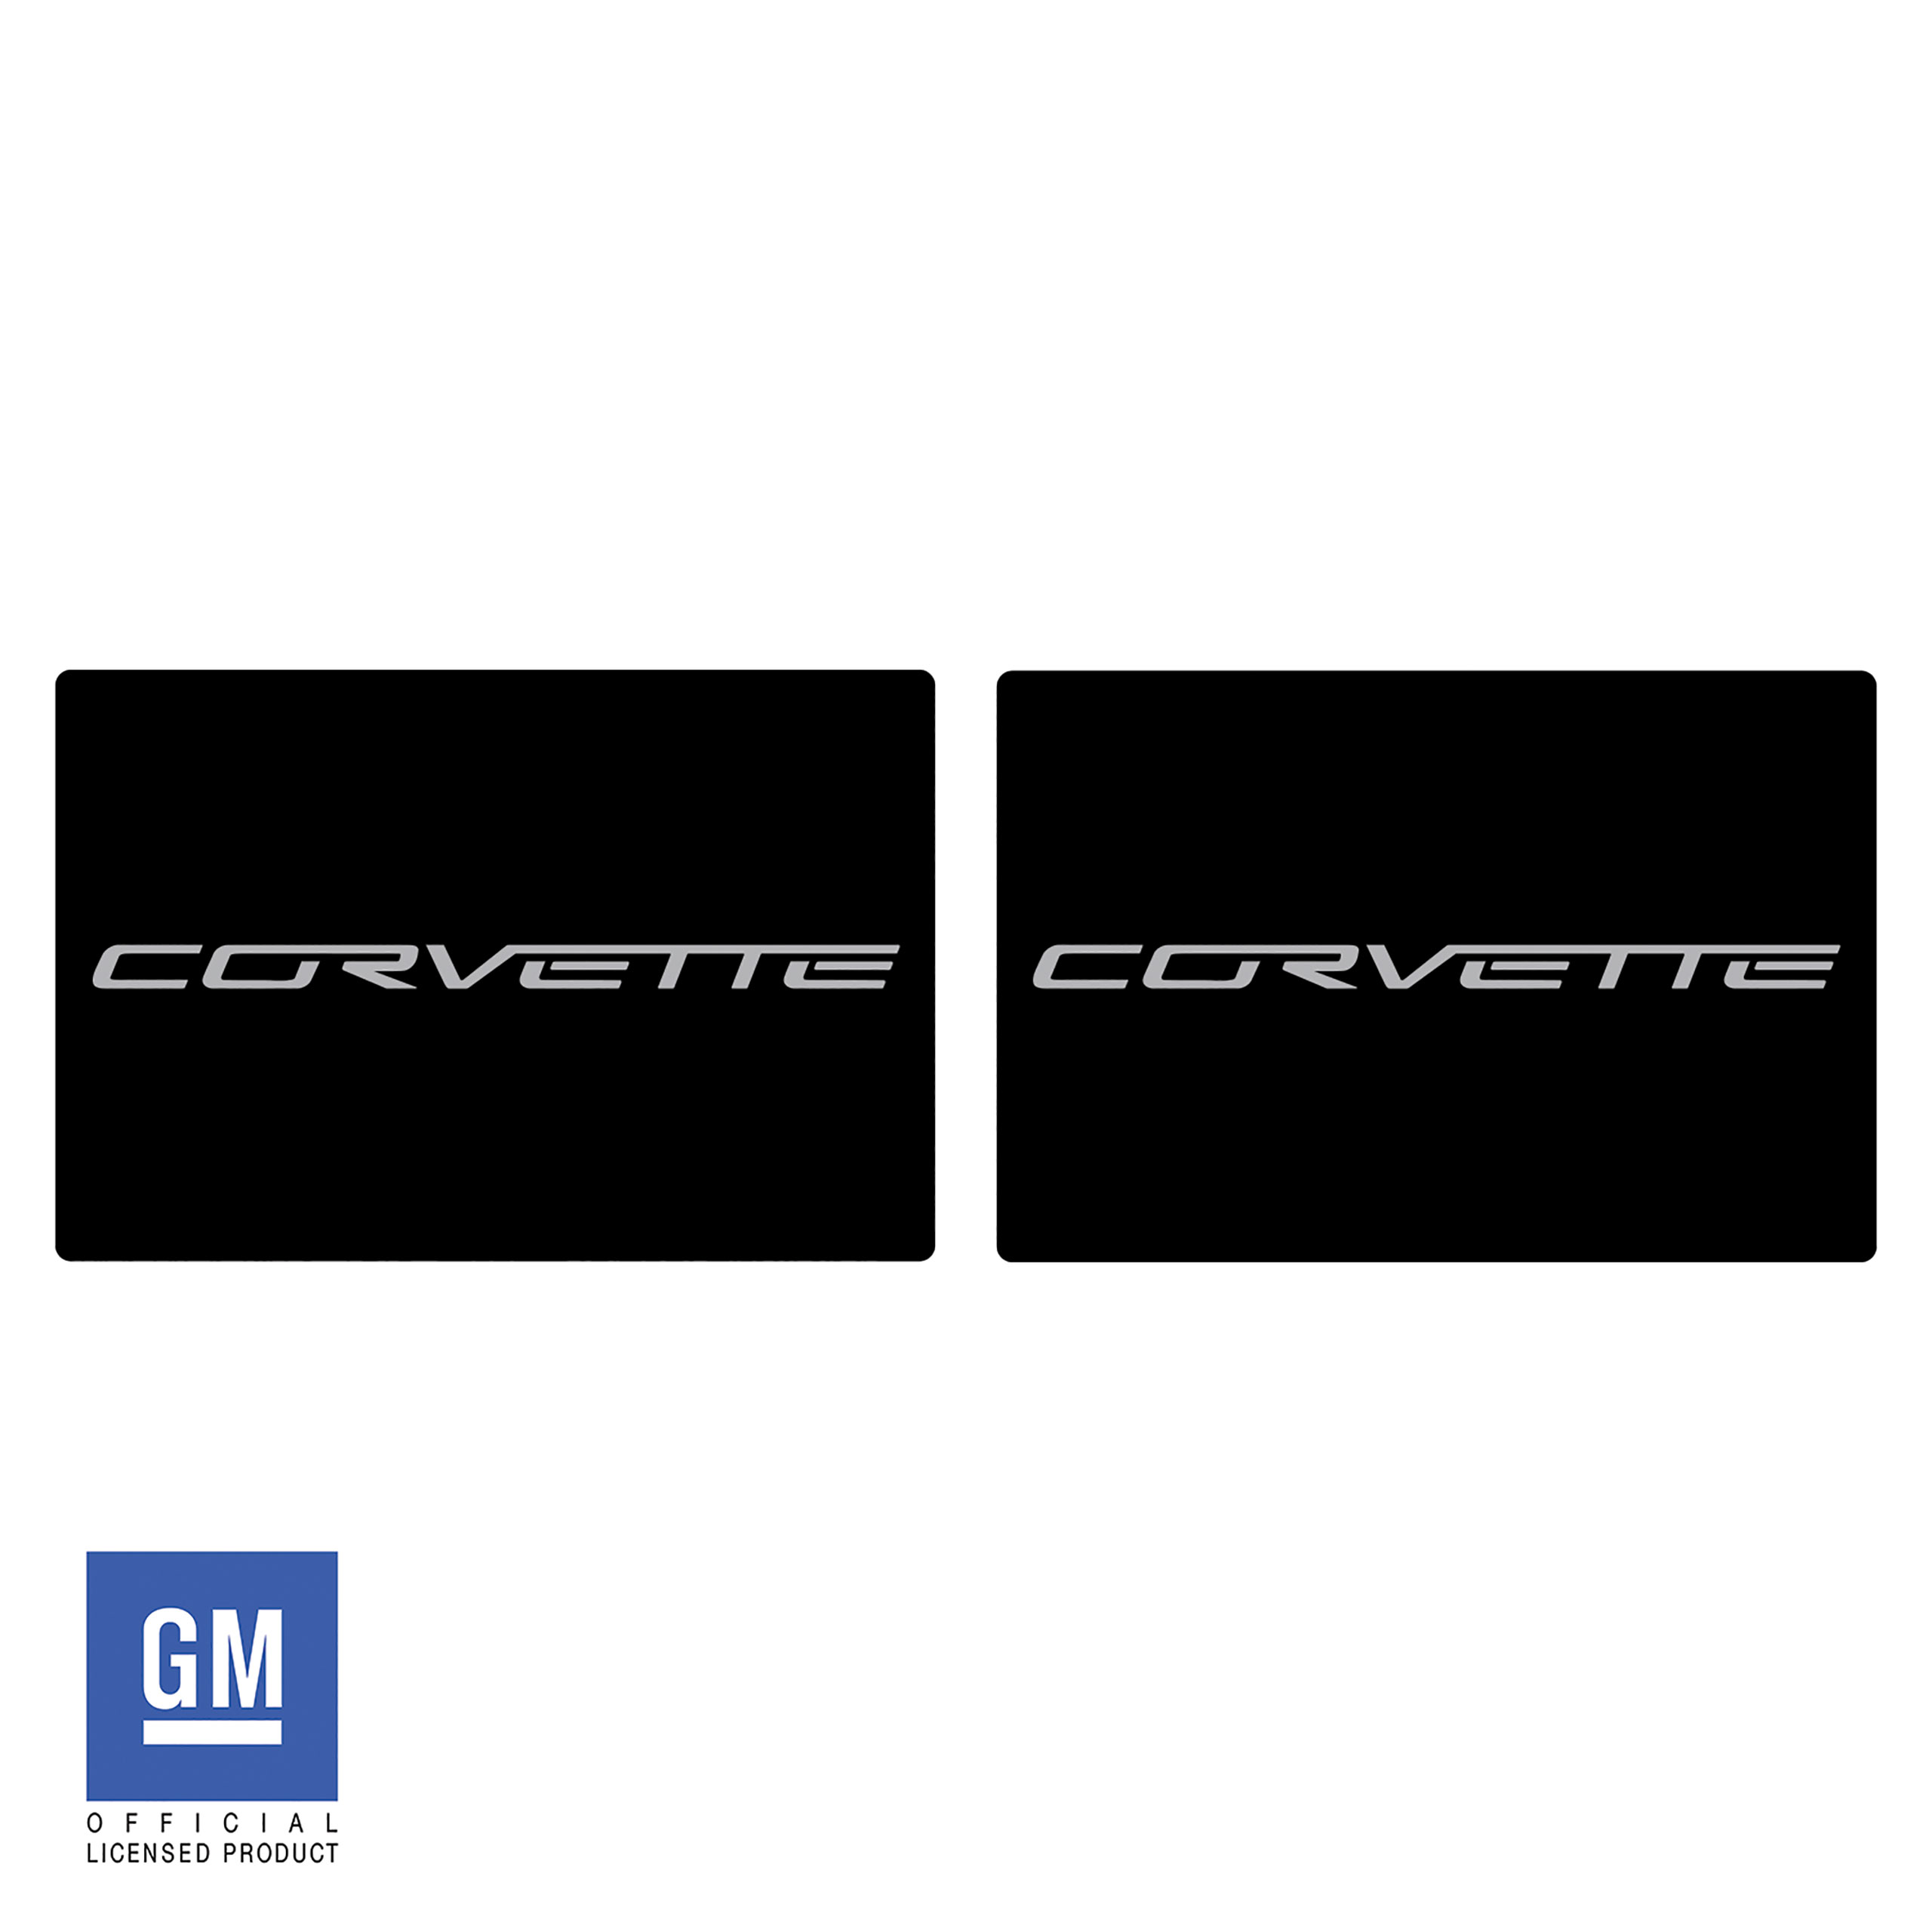 2005-2013 C6 Corvette Sunvisor Label Covers - Matte Black W/Gloss Gray Corvette Script